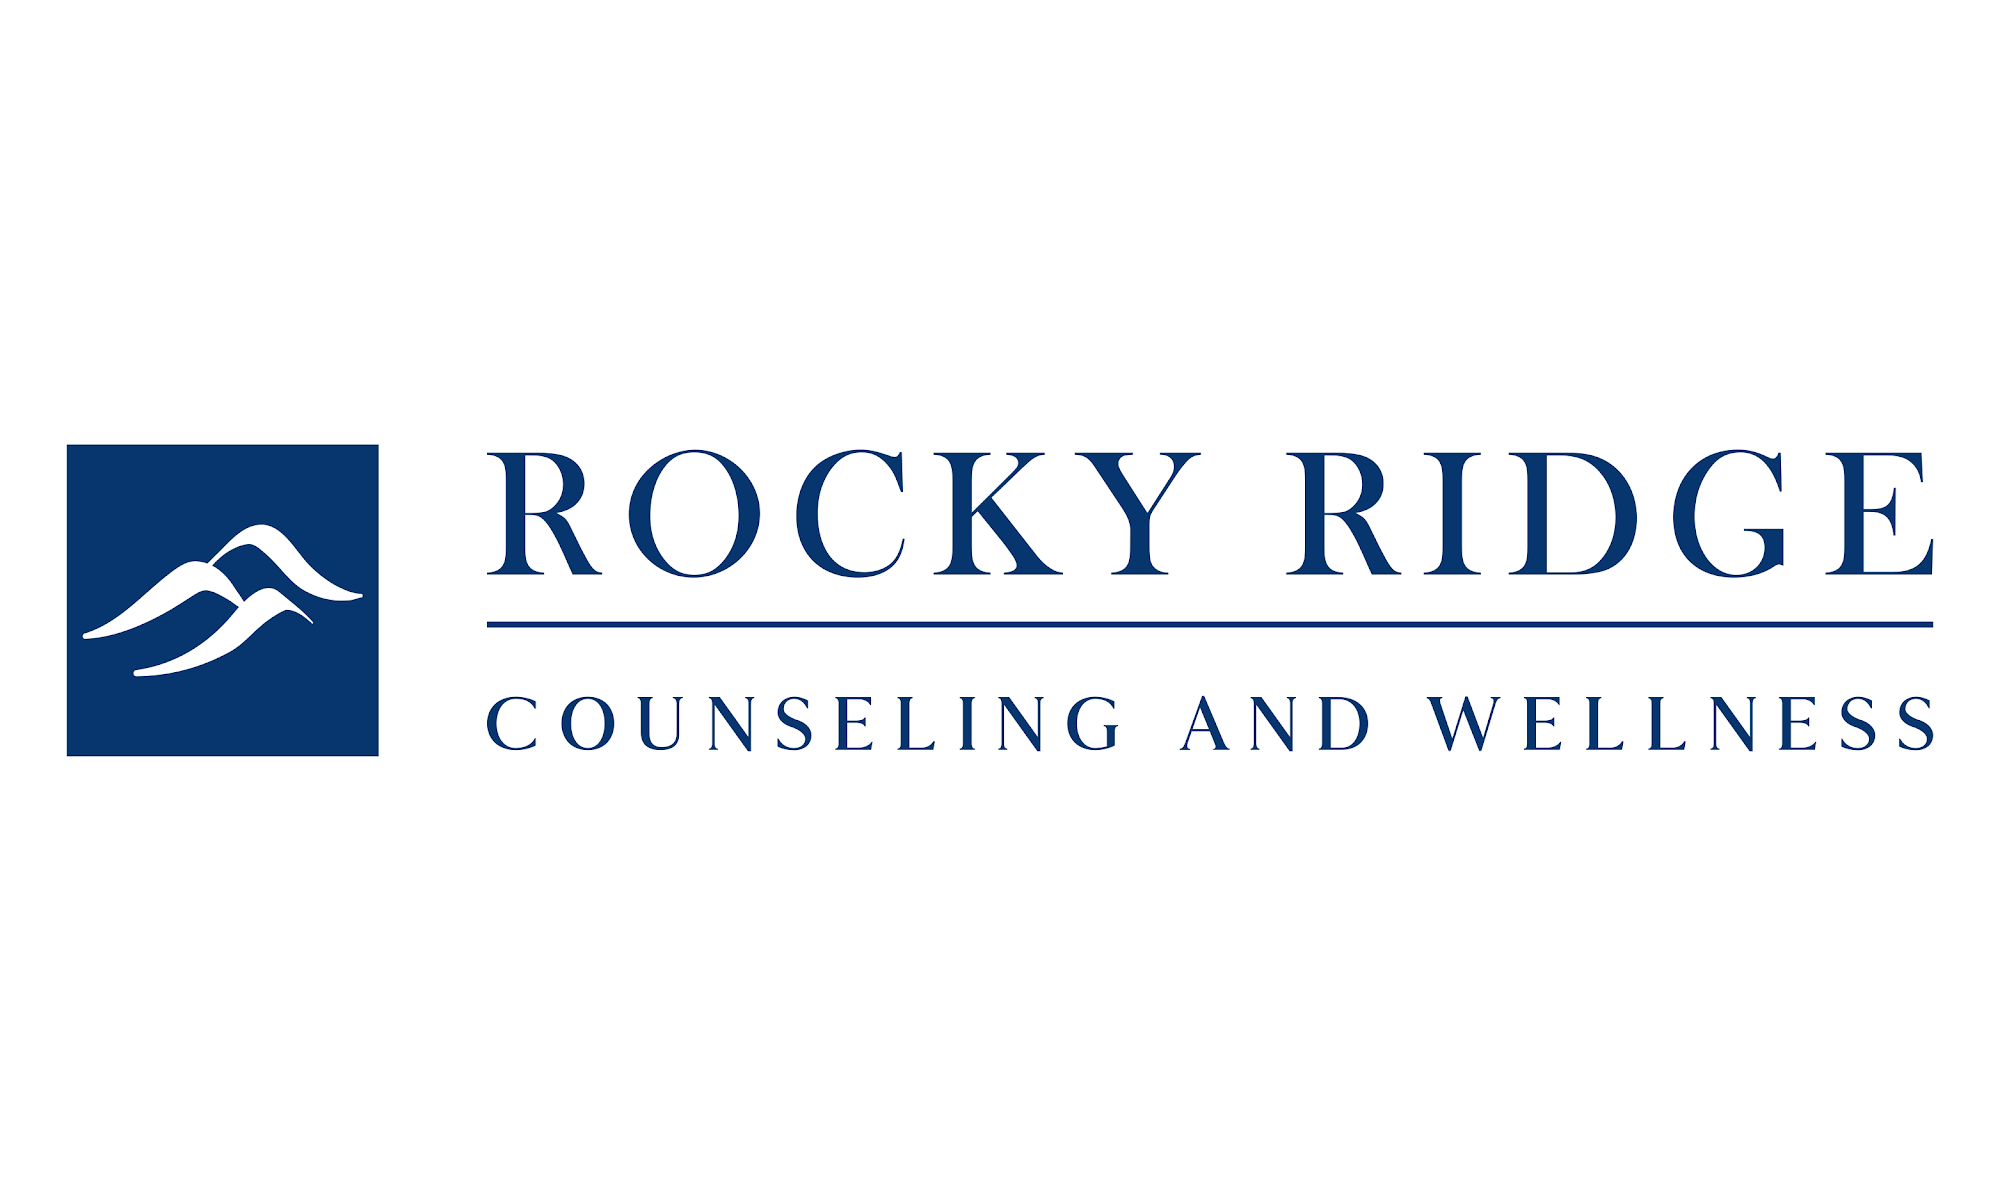 Rocky Ridge Counseling and Wellness